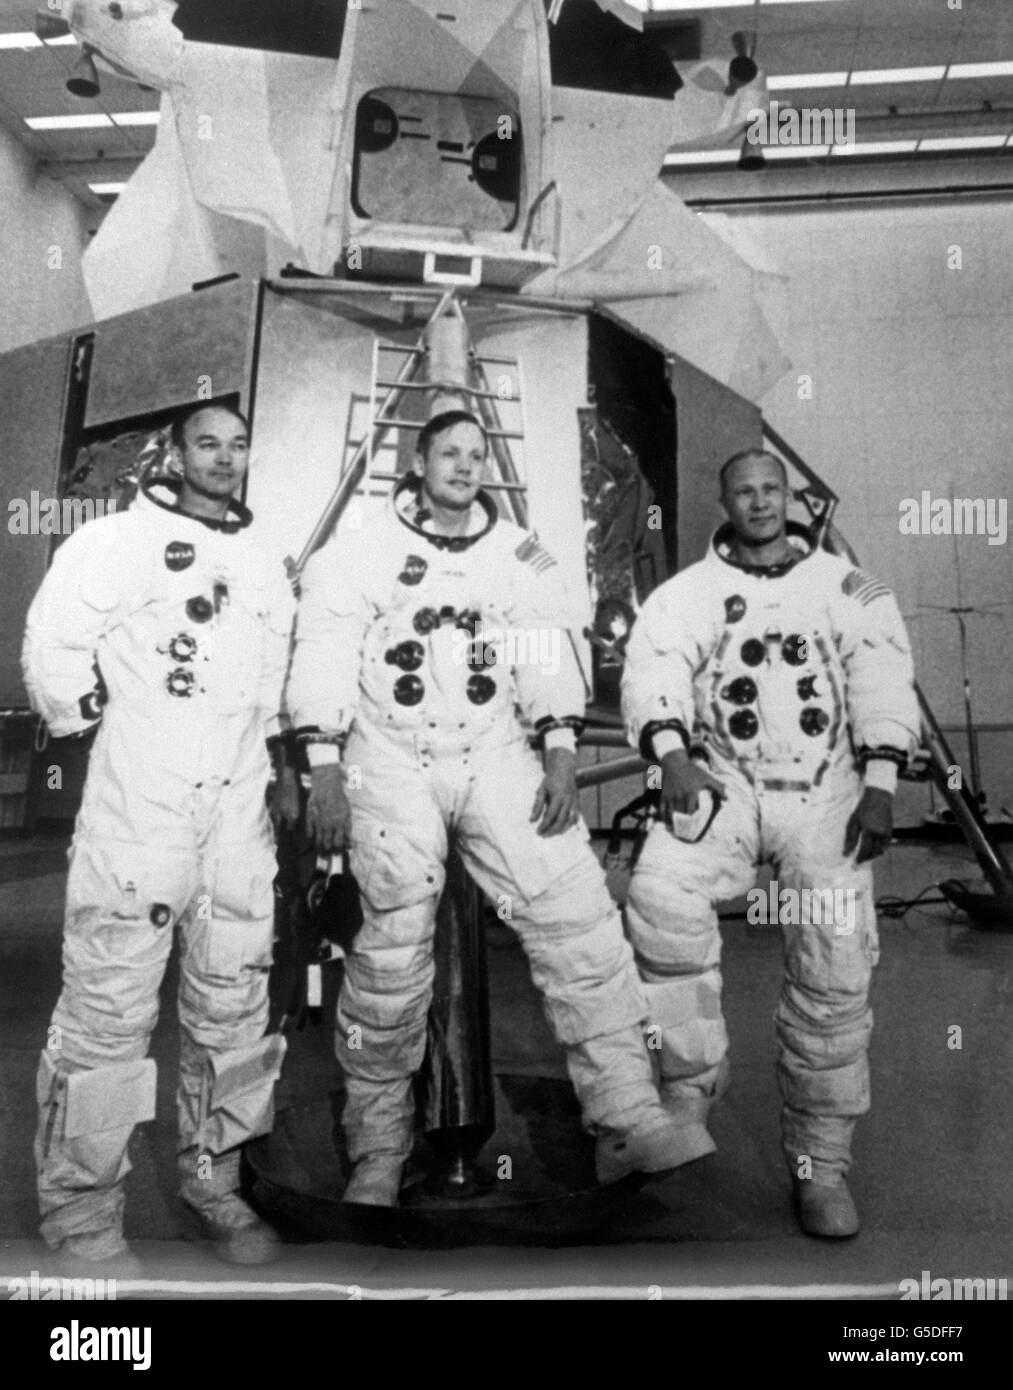 Space - Apollo 11 crew Stock Photo